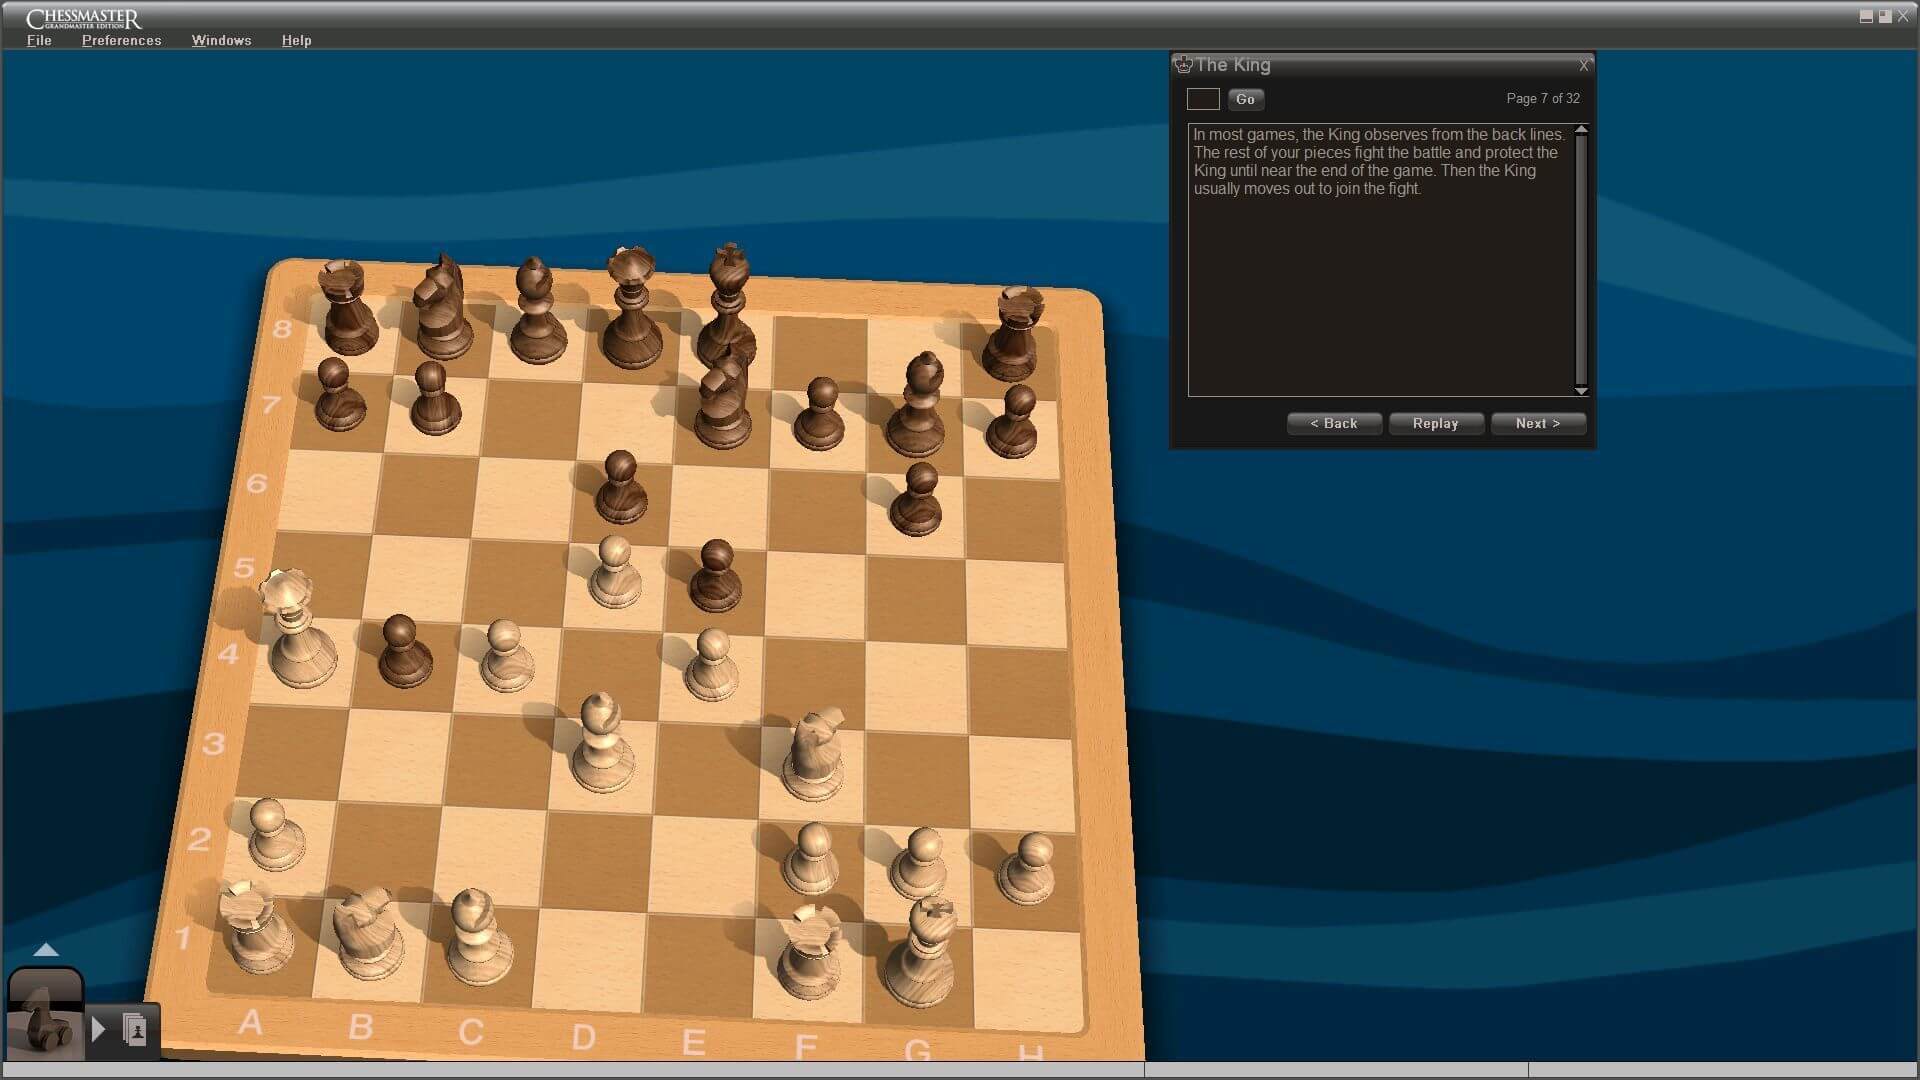 Chessmaster: Grandmaster Edition - release date, videos